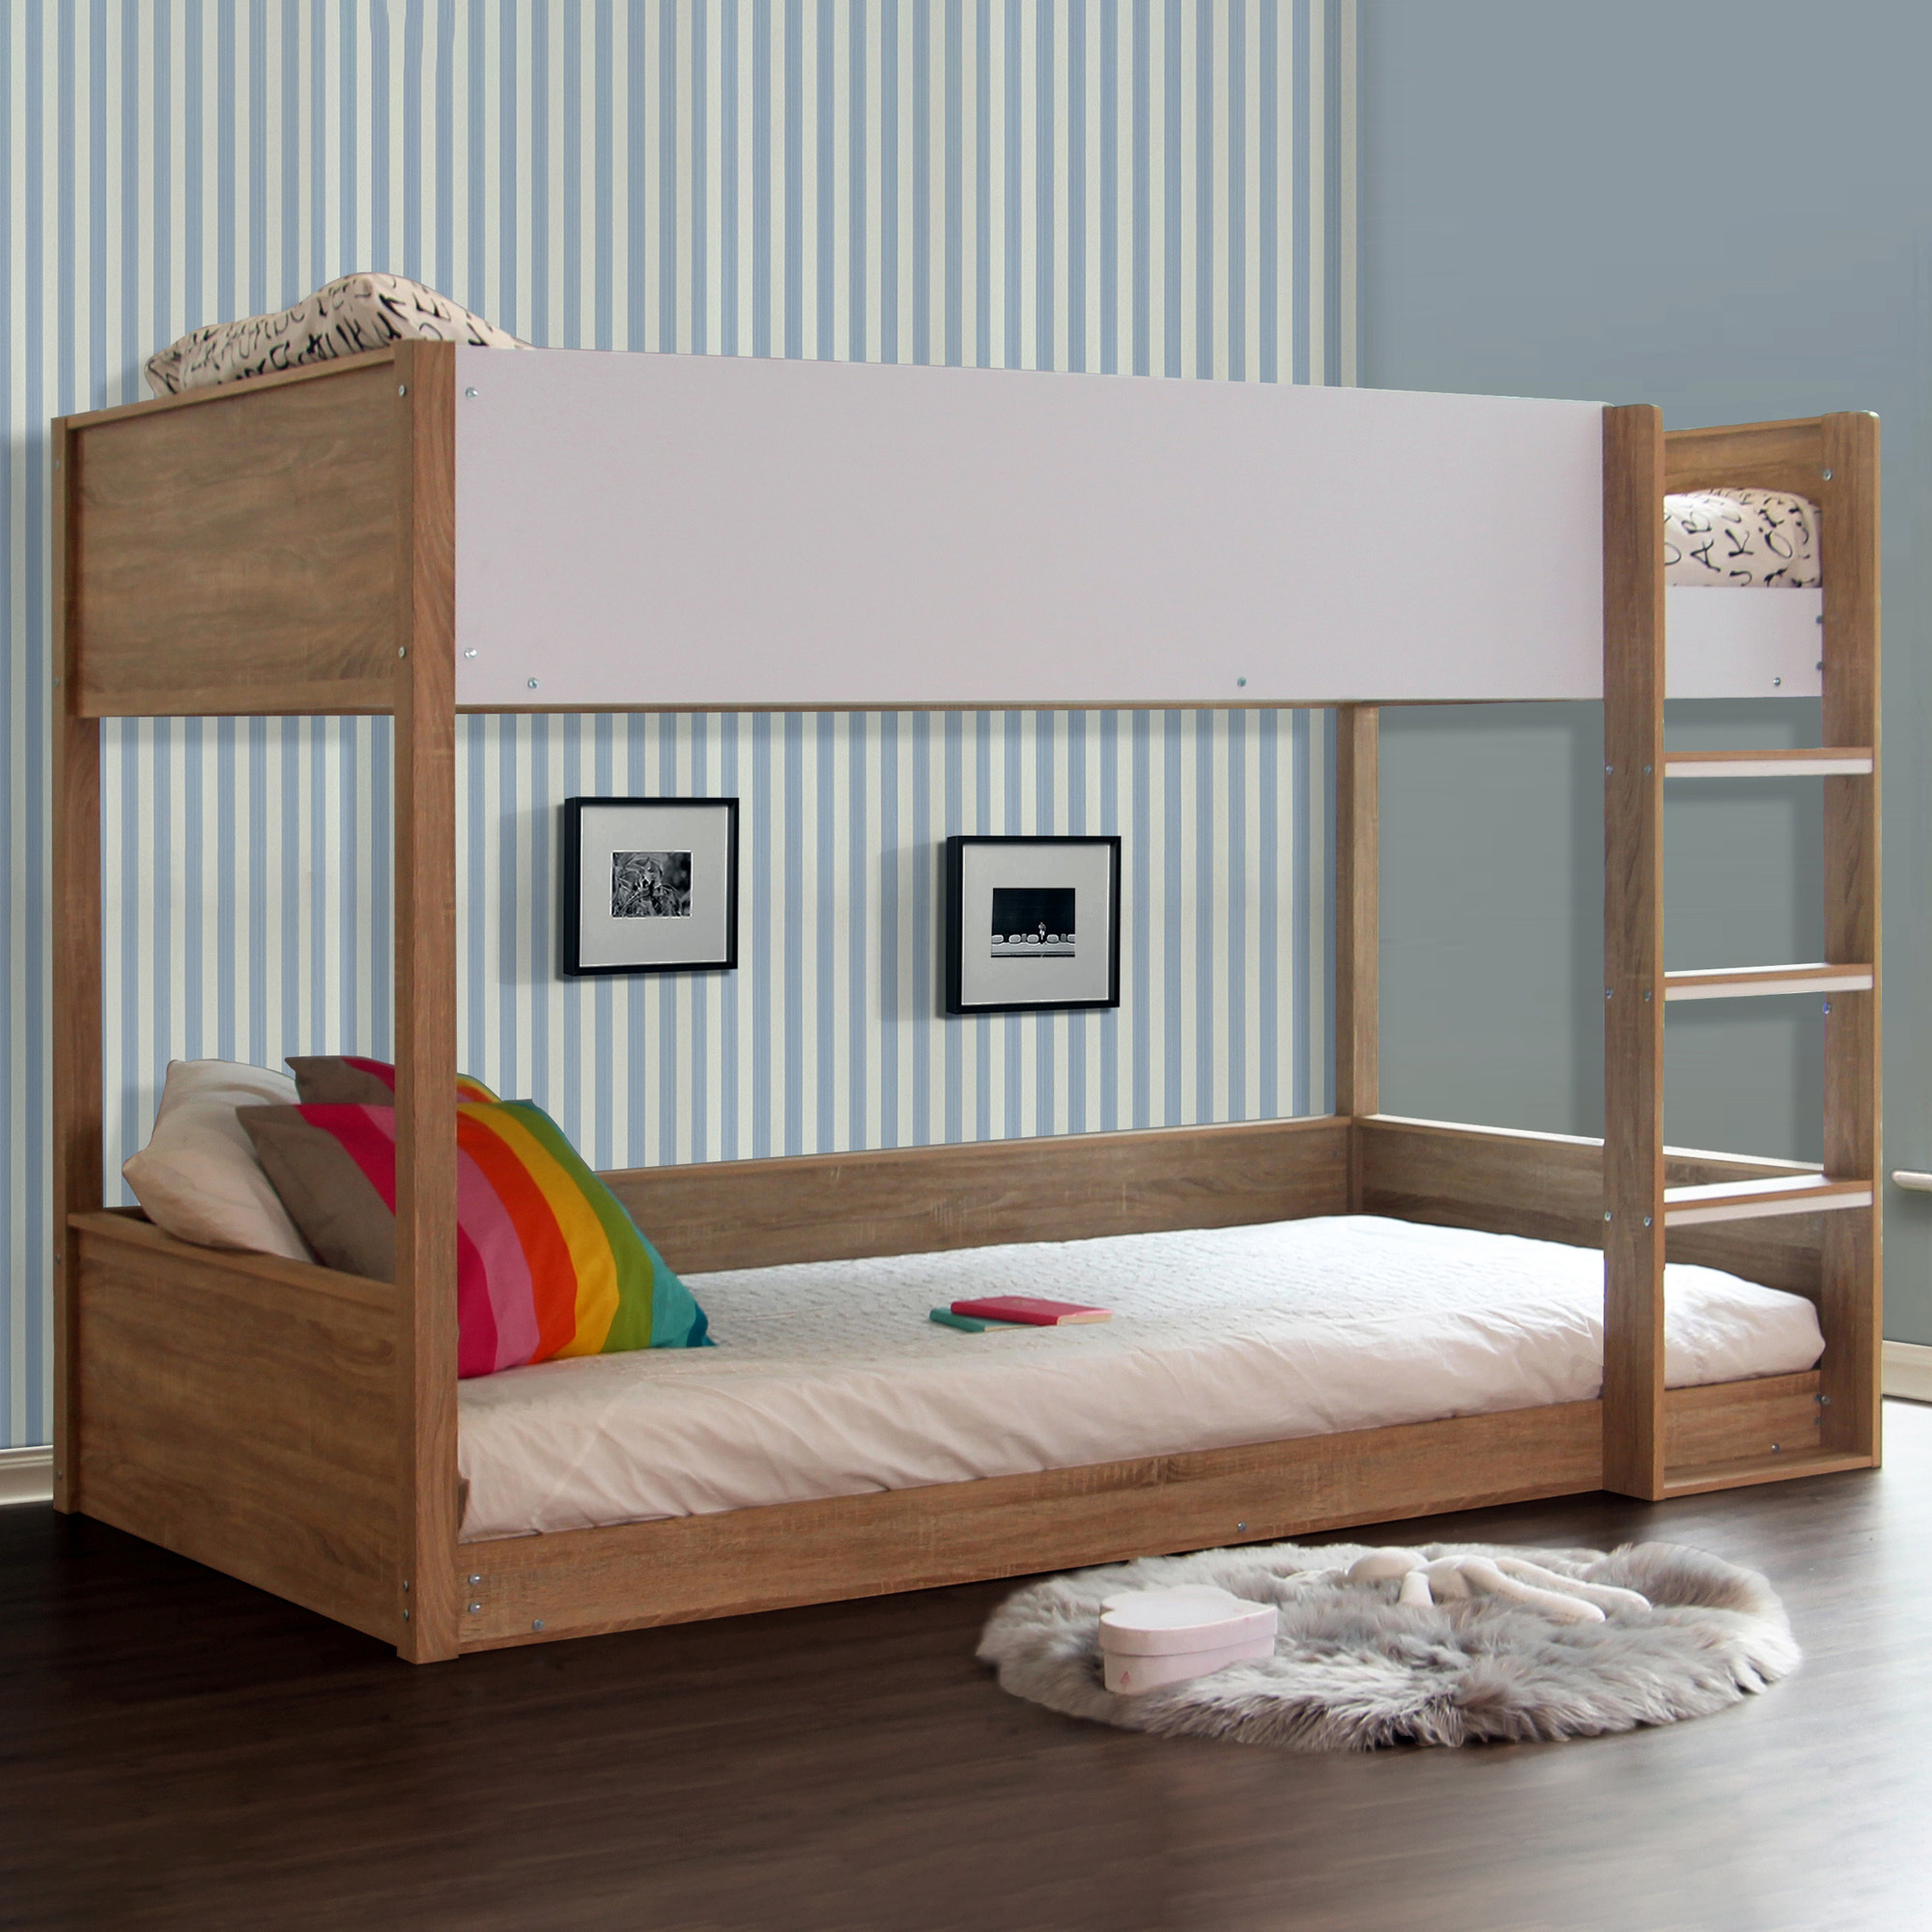 Vic Furniture Sonoma Oak Gisborne King, Bunk Beds Convert To Single